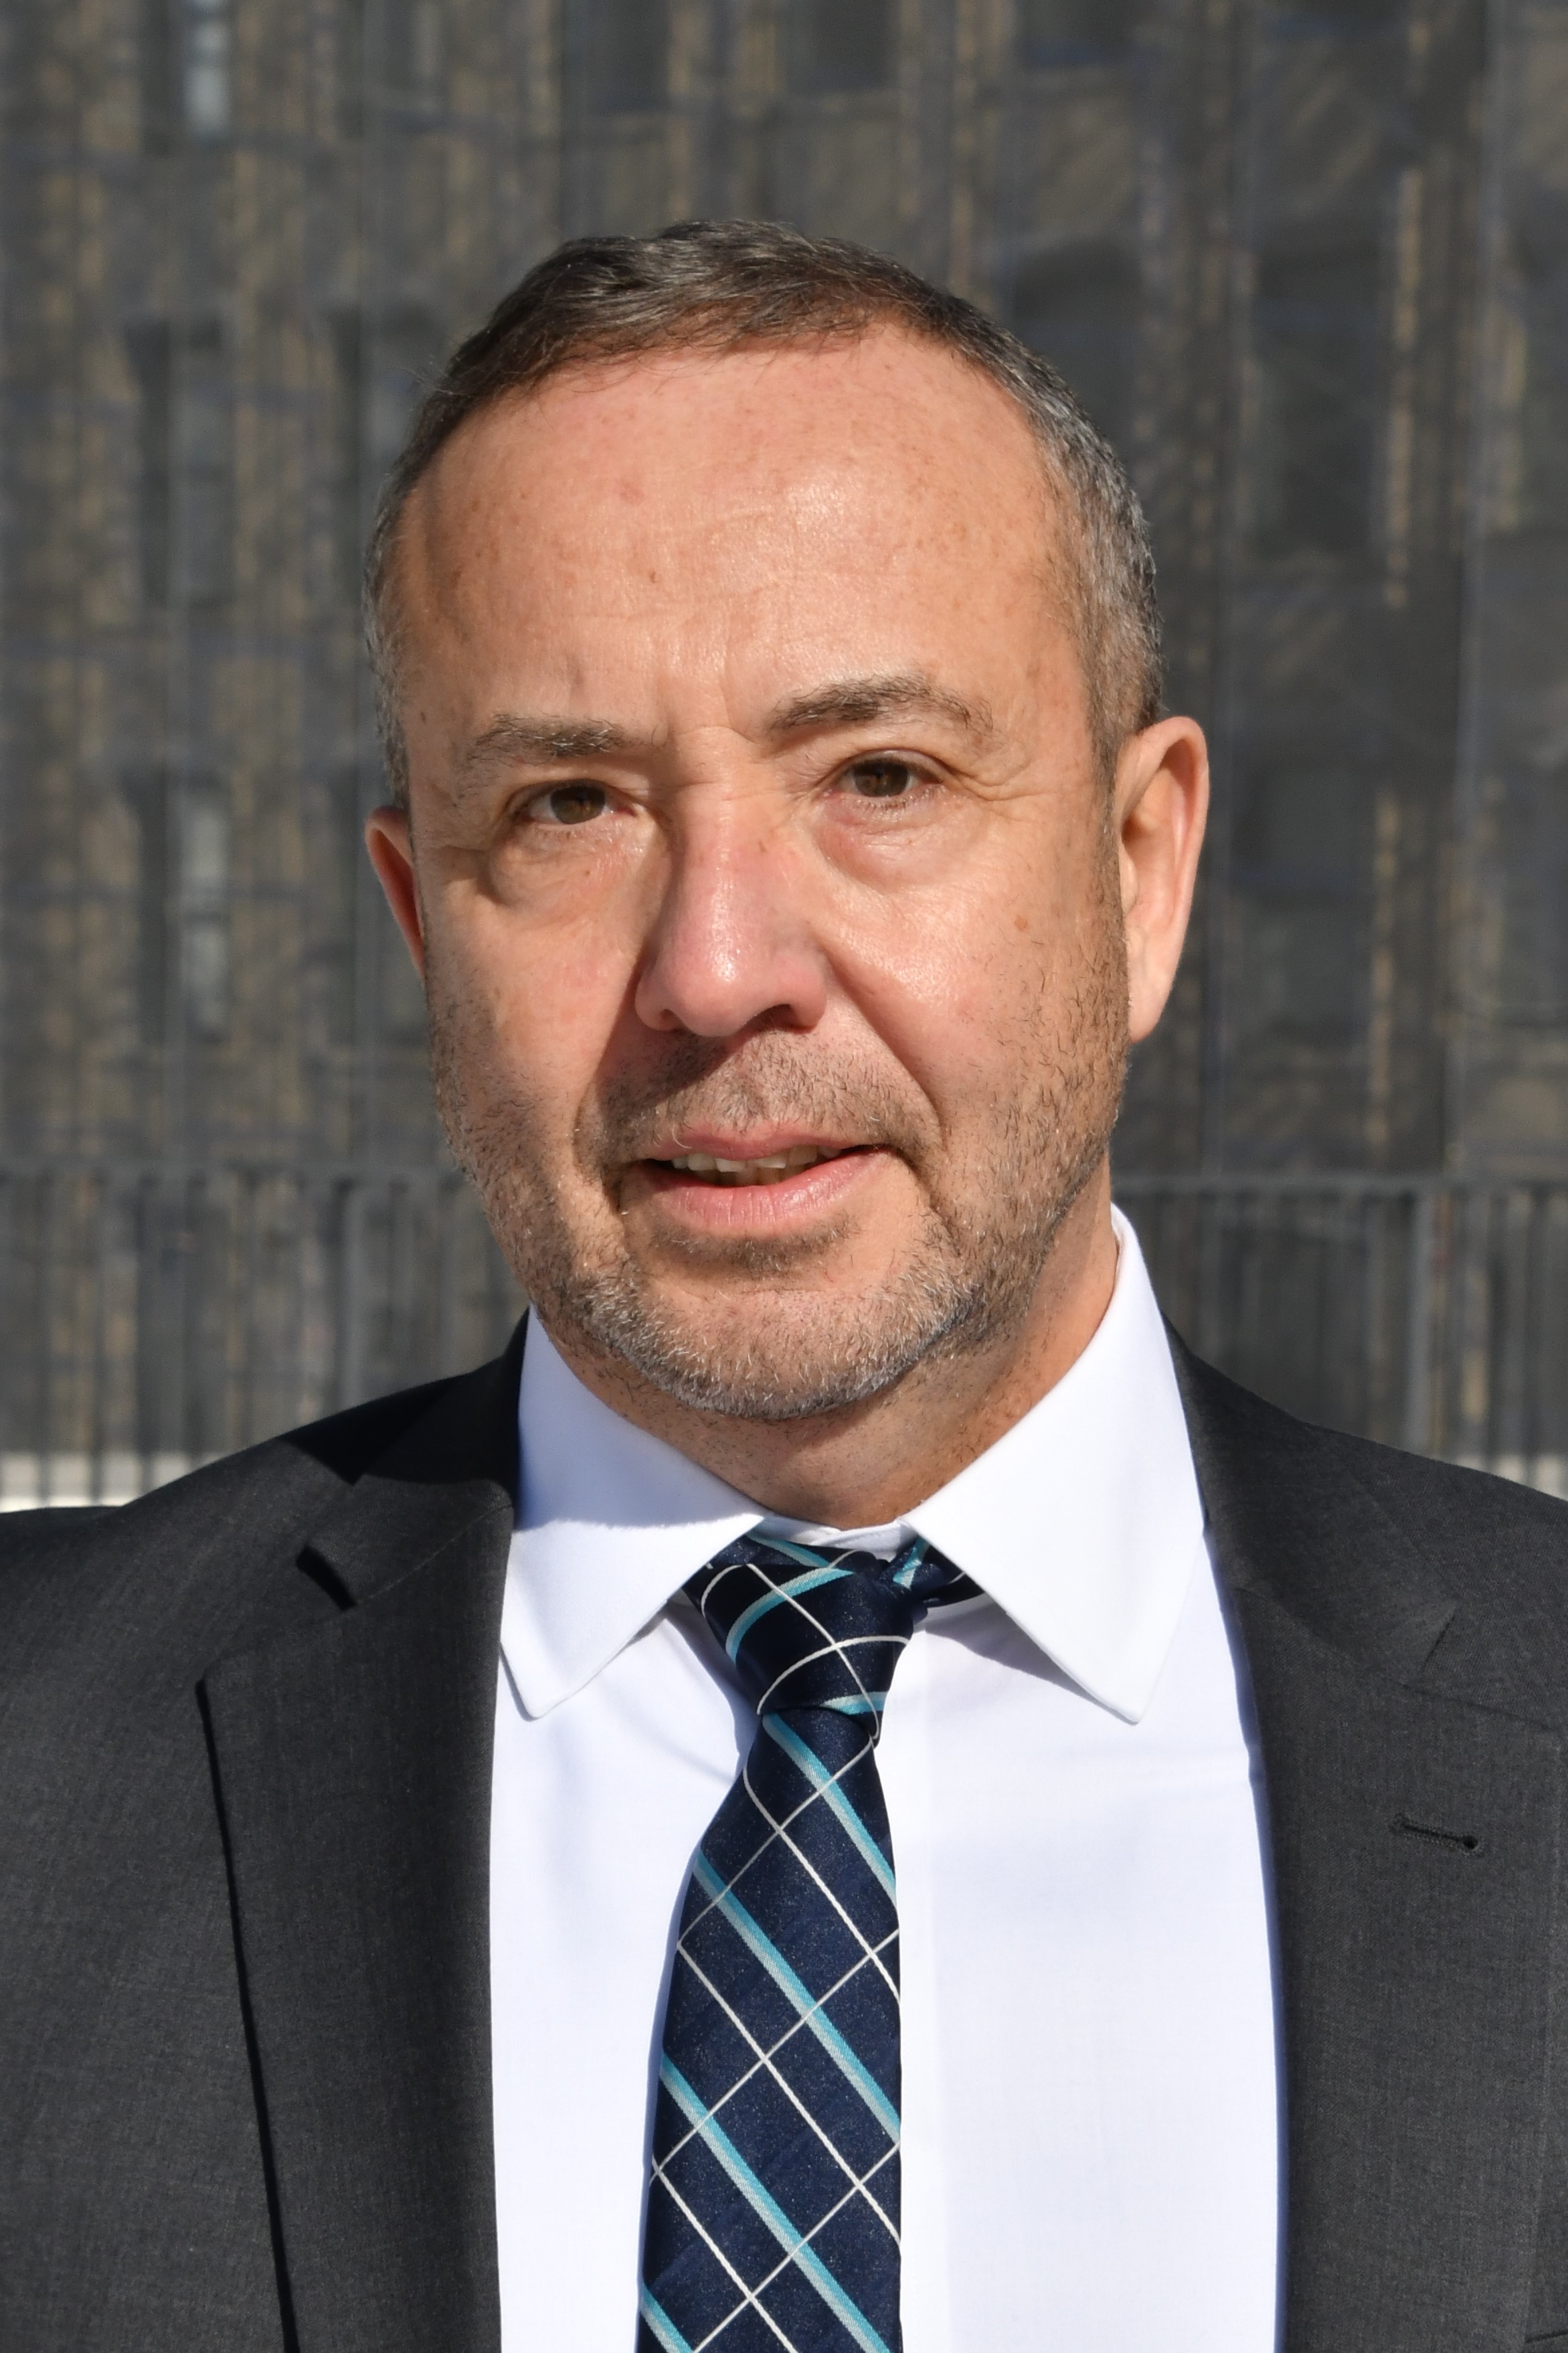 Commissioner Kazimir Vilenchik